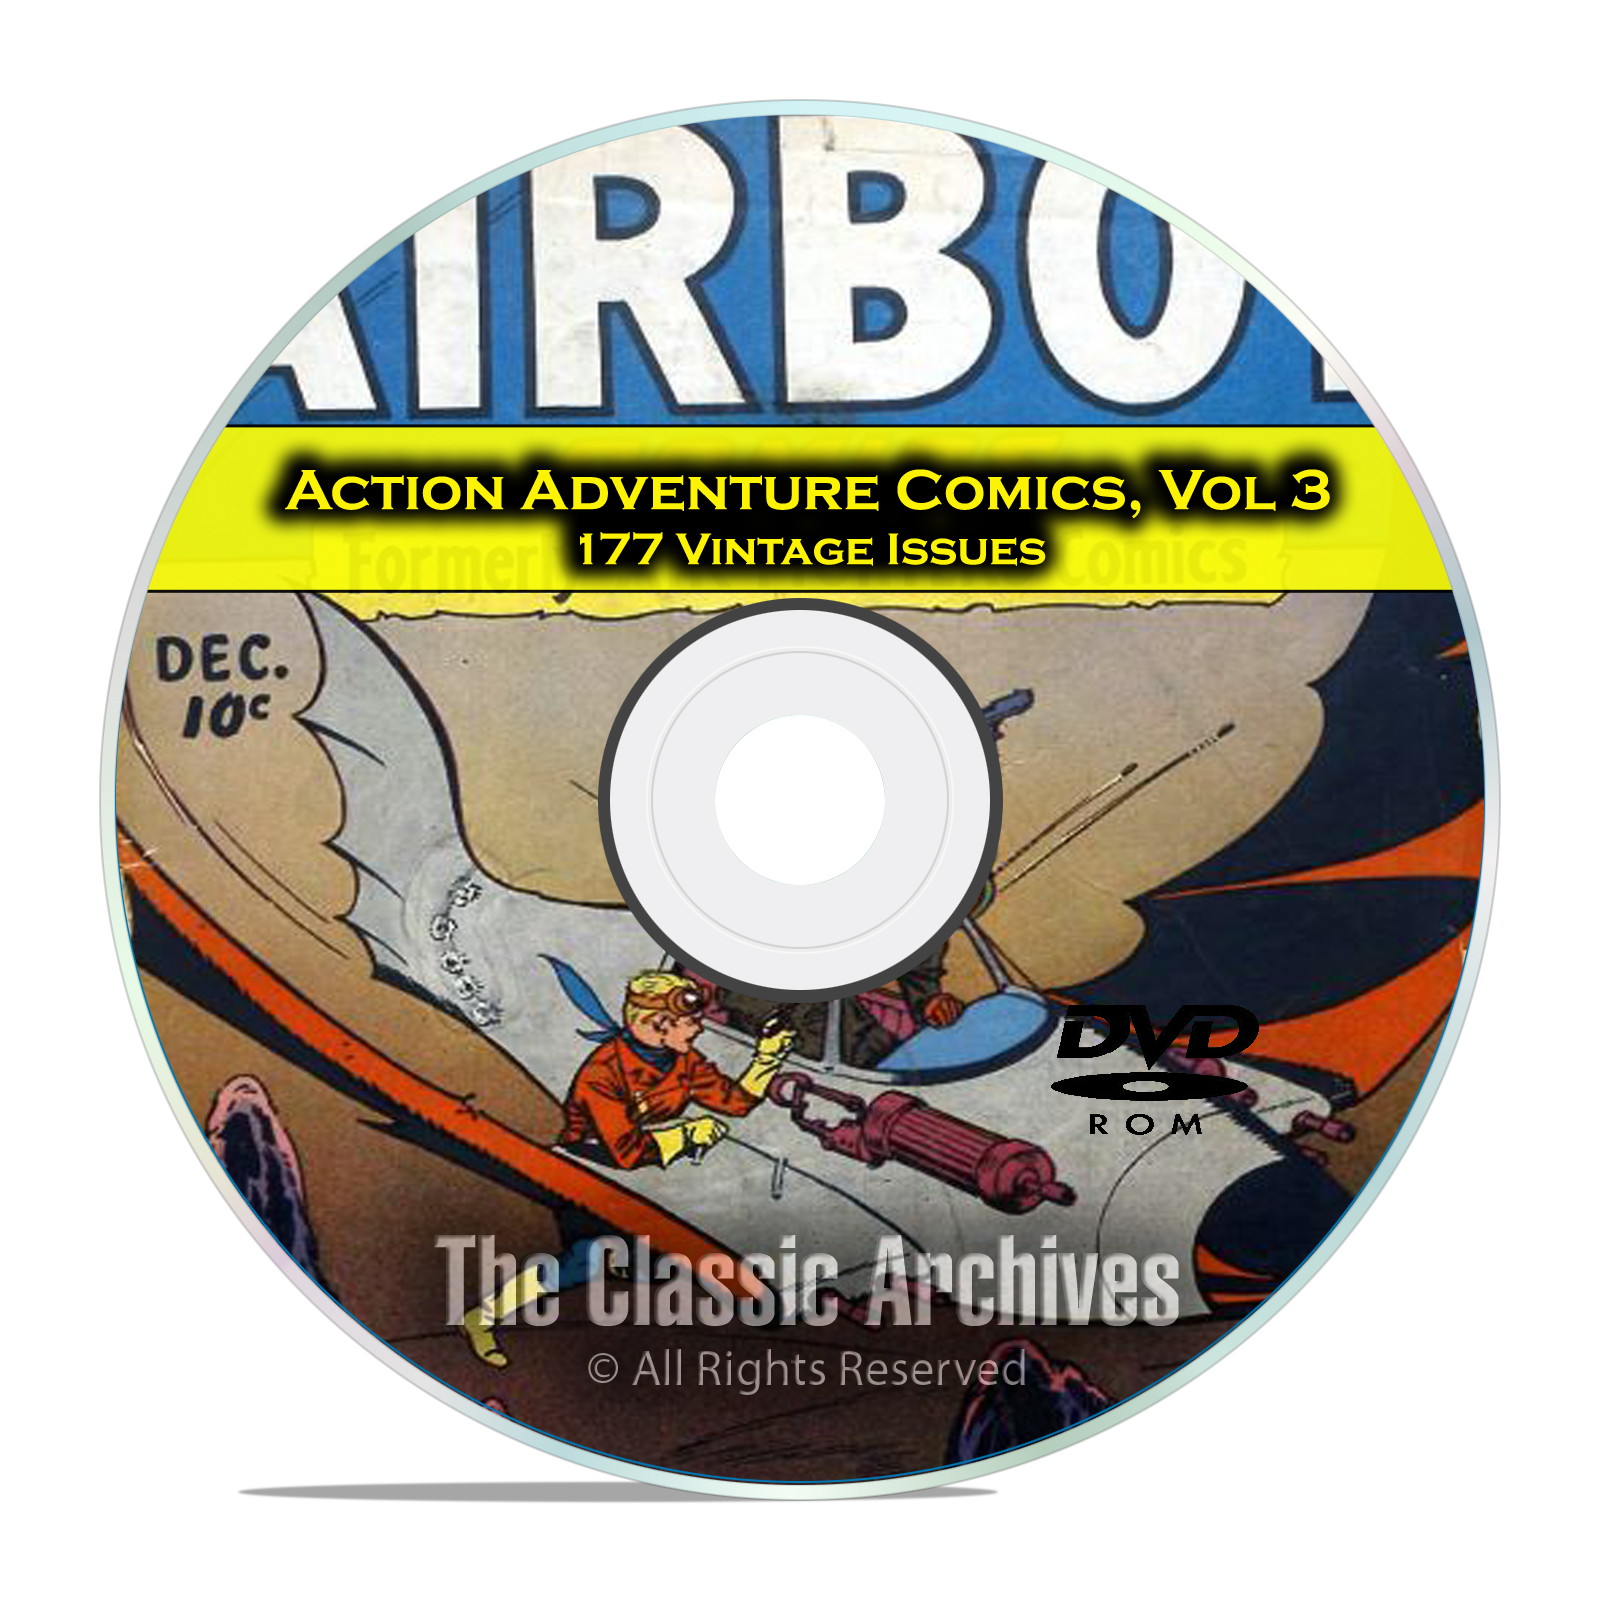 Action Adventure Comics, Vol 3, Airboy Jo Jo, Rulah, Jungle, Golden Age DVD